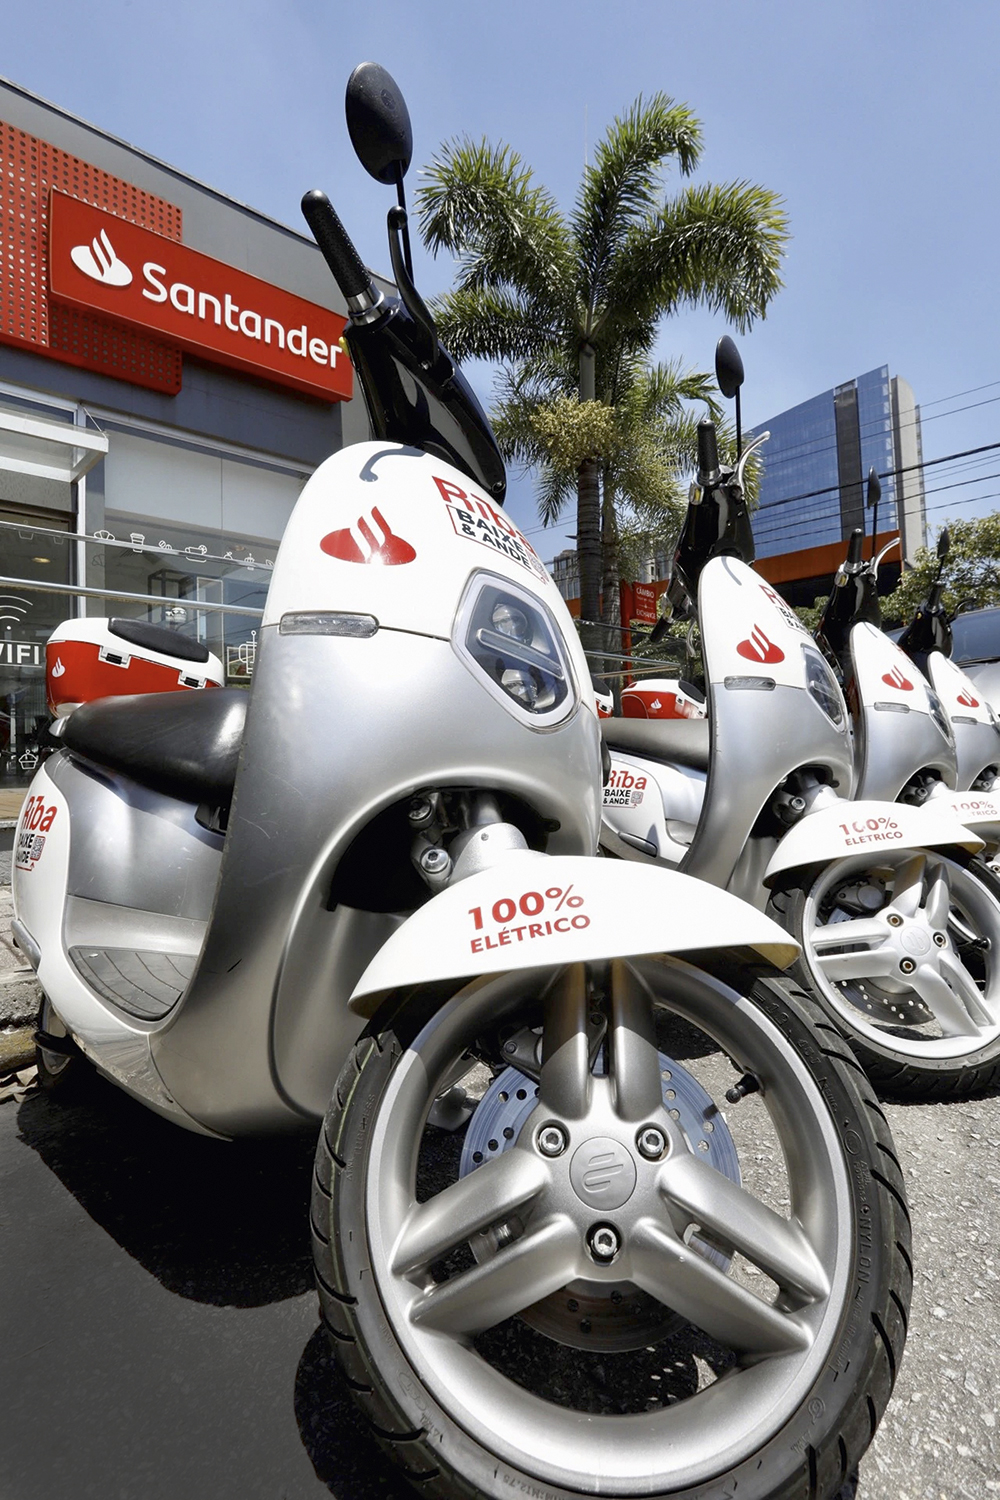 SUSTENTÁVEL - As scooters elétricas do Santander: menos gás carbônico na atmosfera -